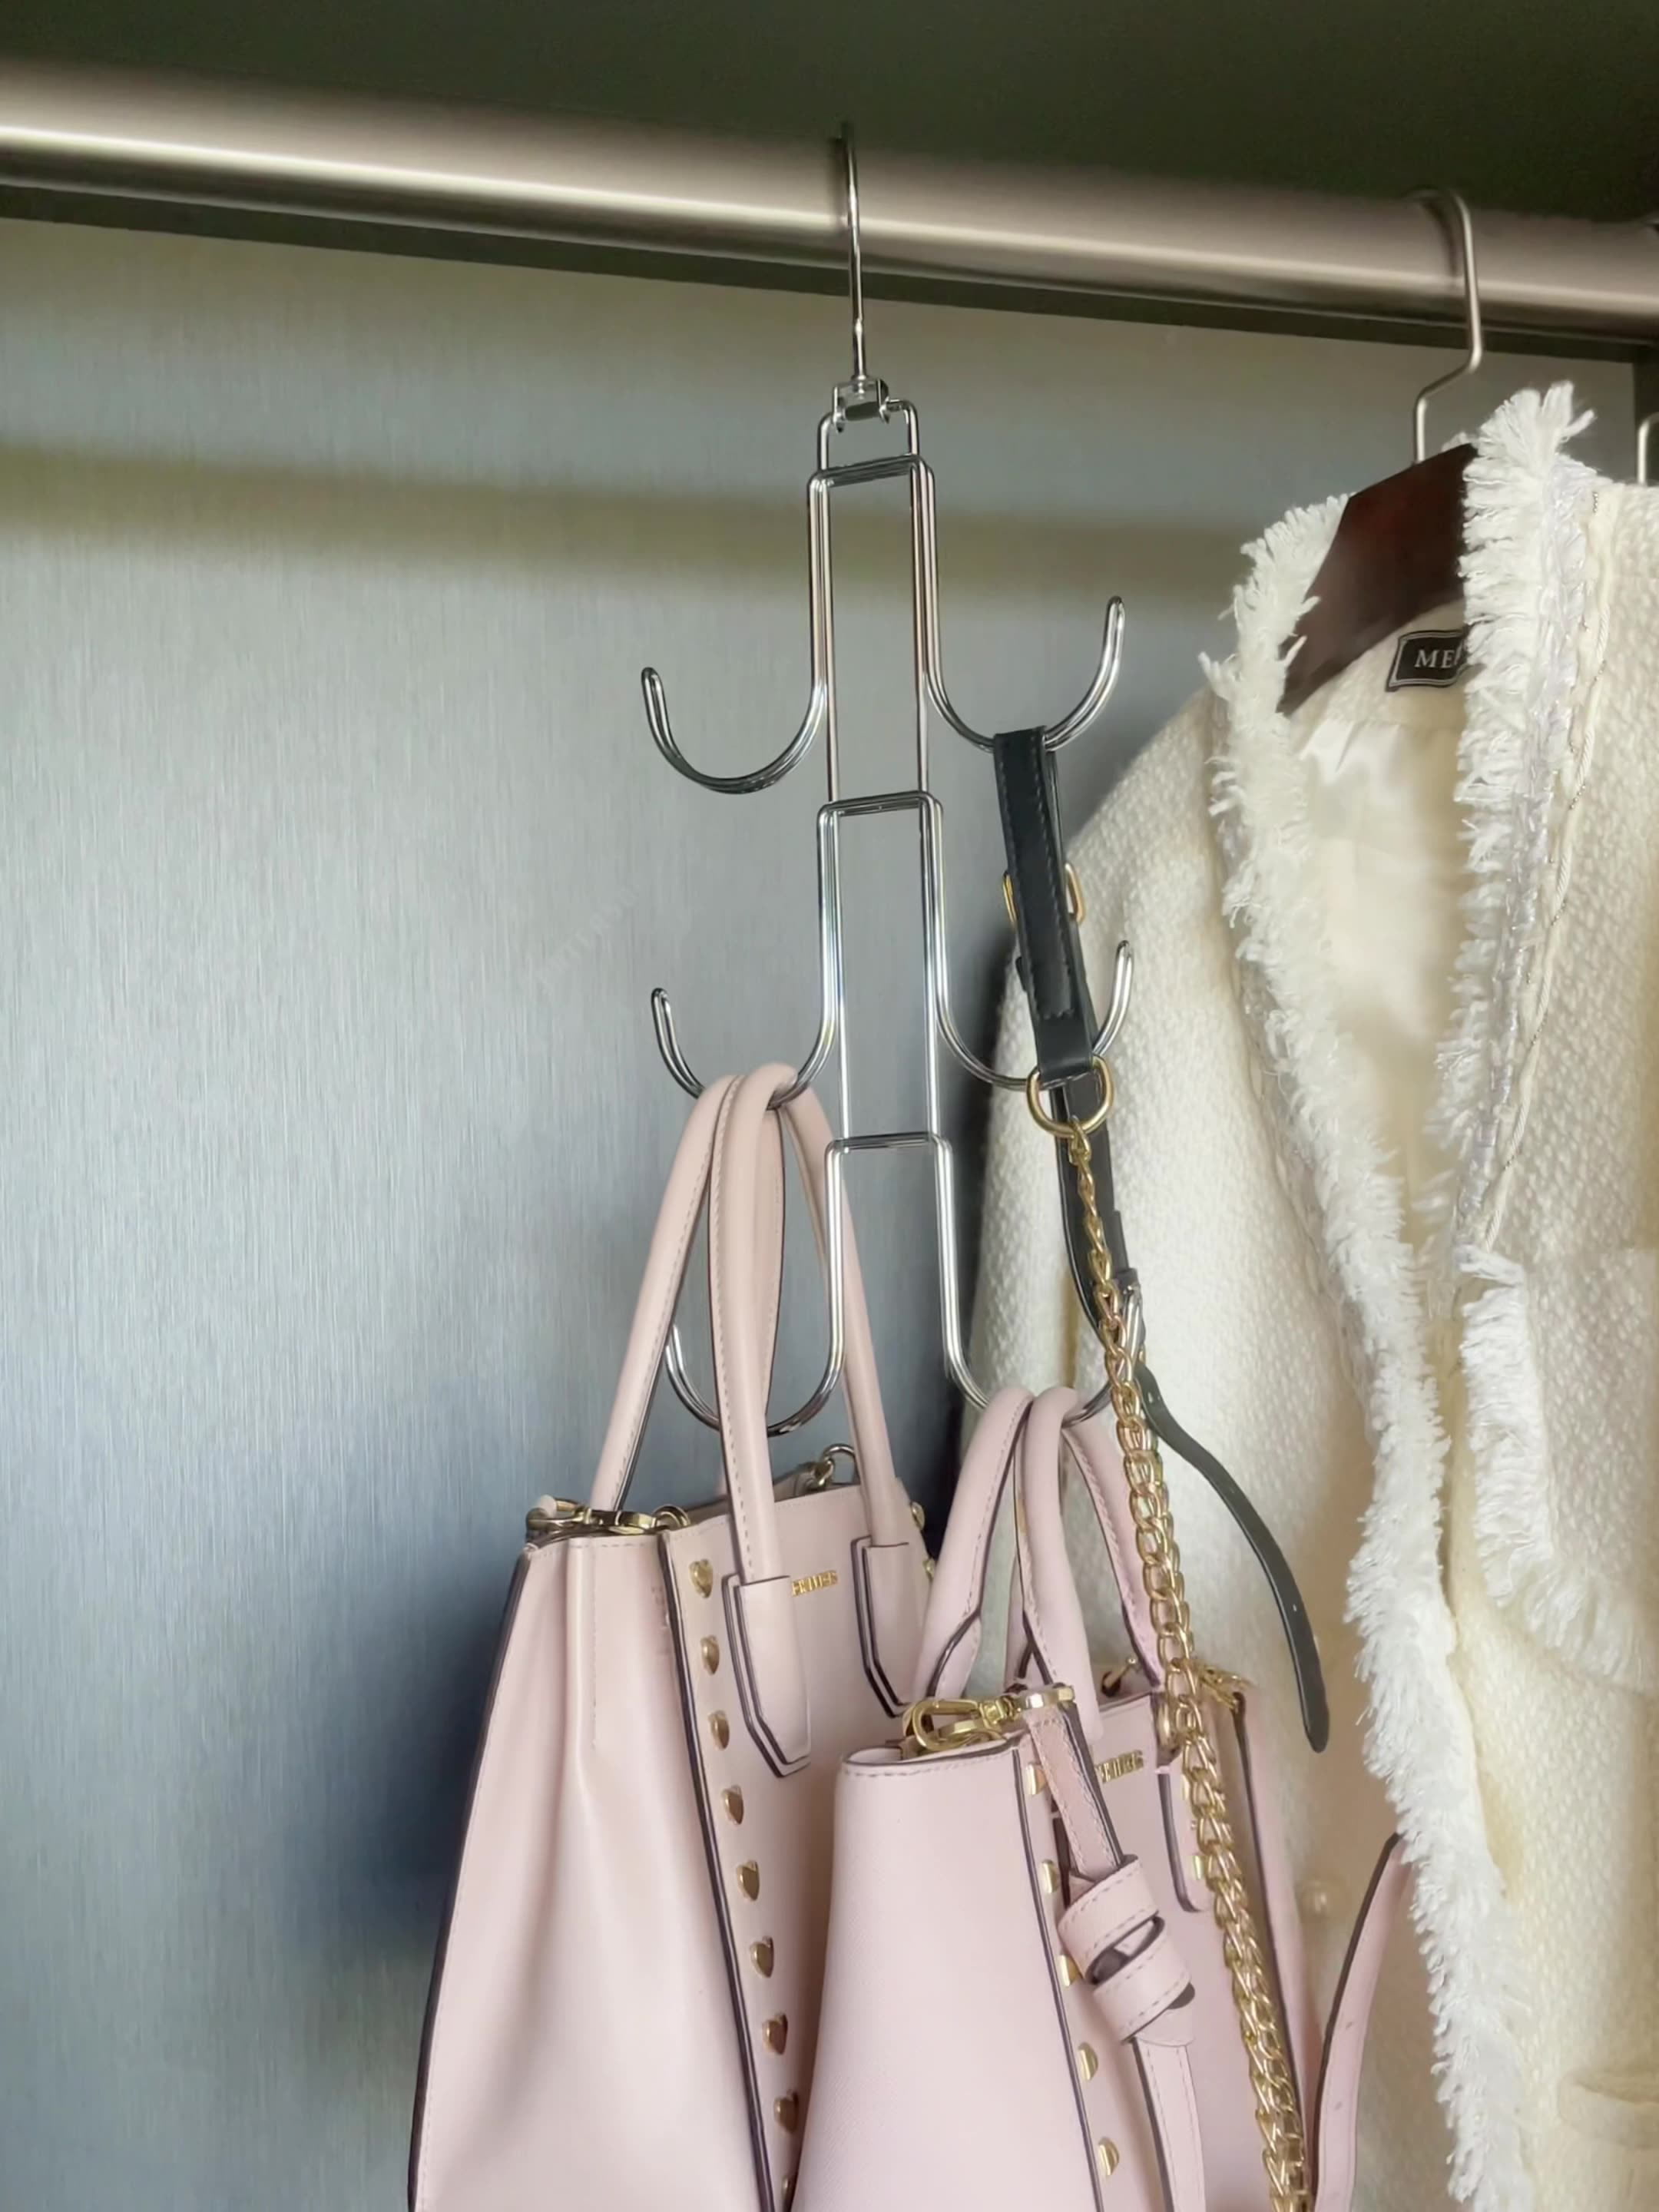 S Hooks Twist Design Bag Hanger ,Closet Rod Hooks for Hanging  Handbags,Purses,Belts,Scarves,Hats,Clothes,Pots and Pans. (8, White) 